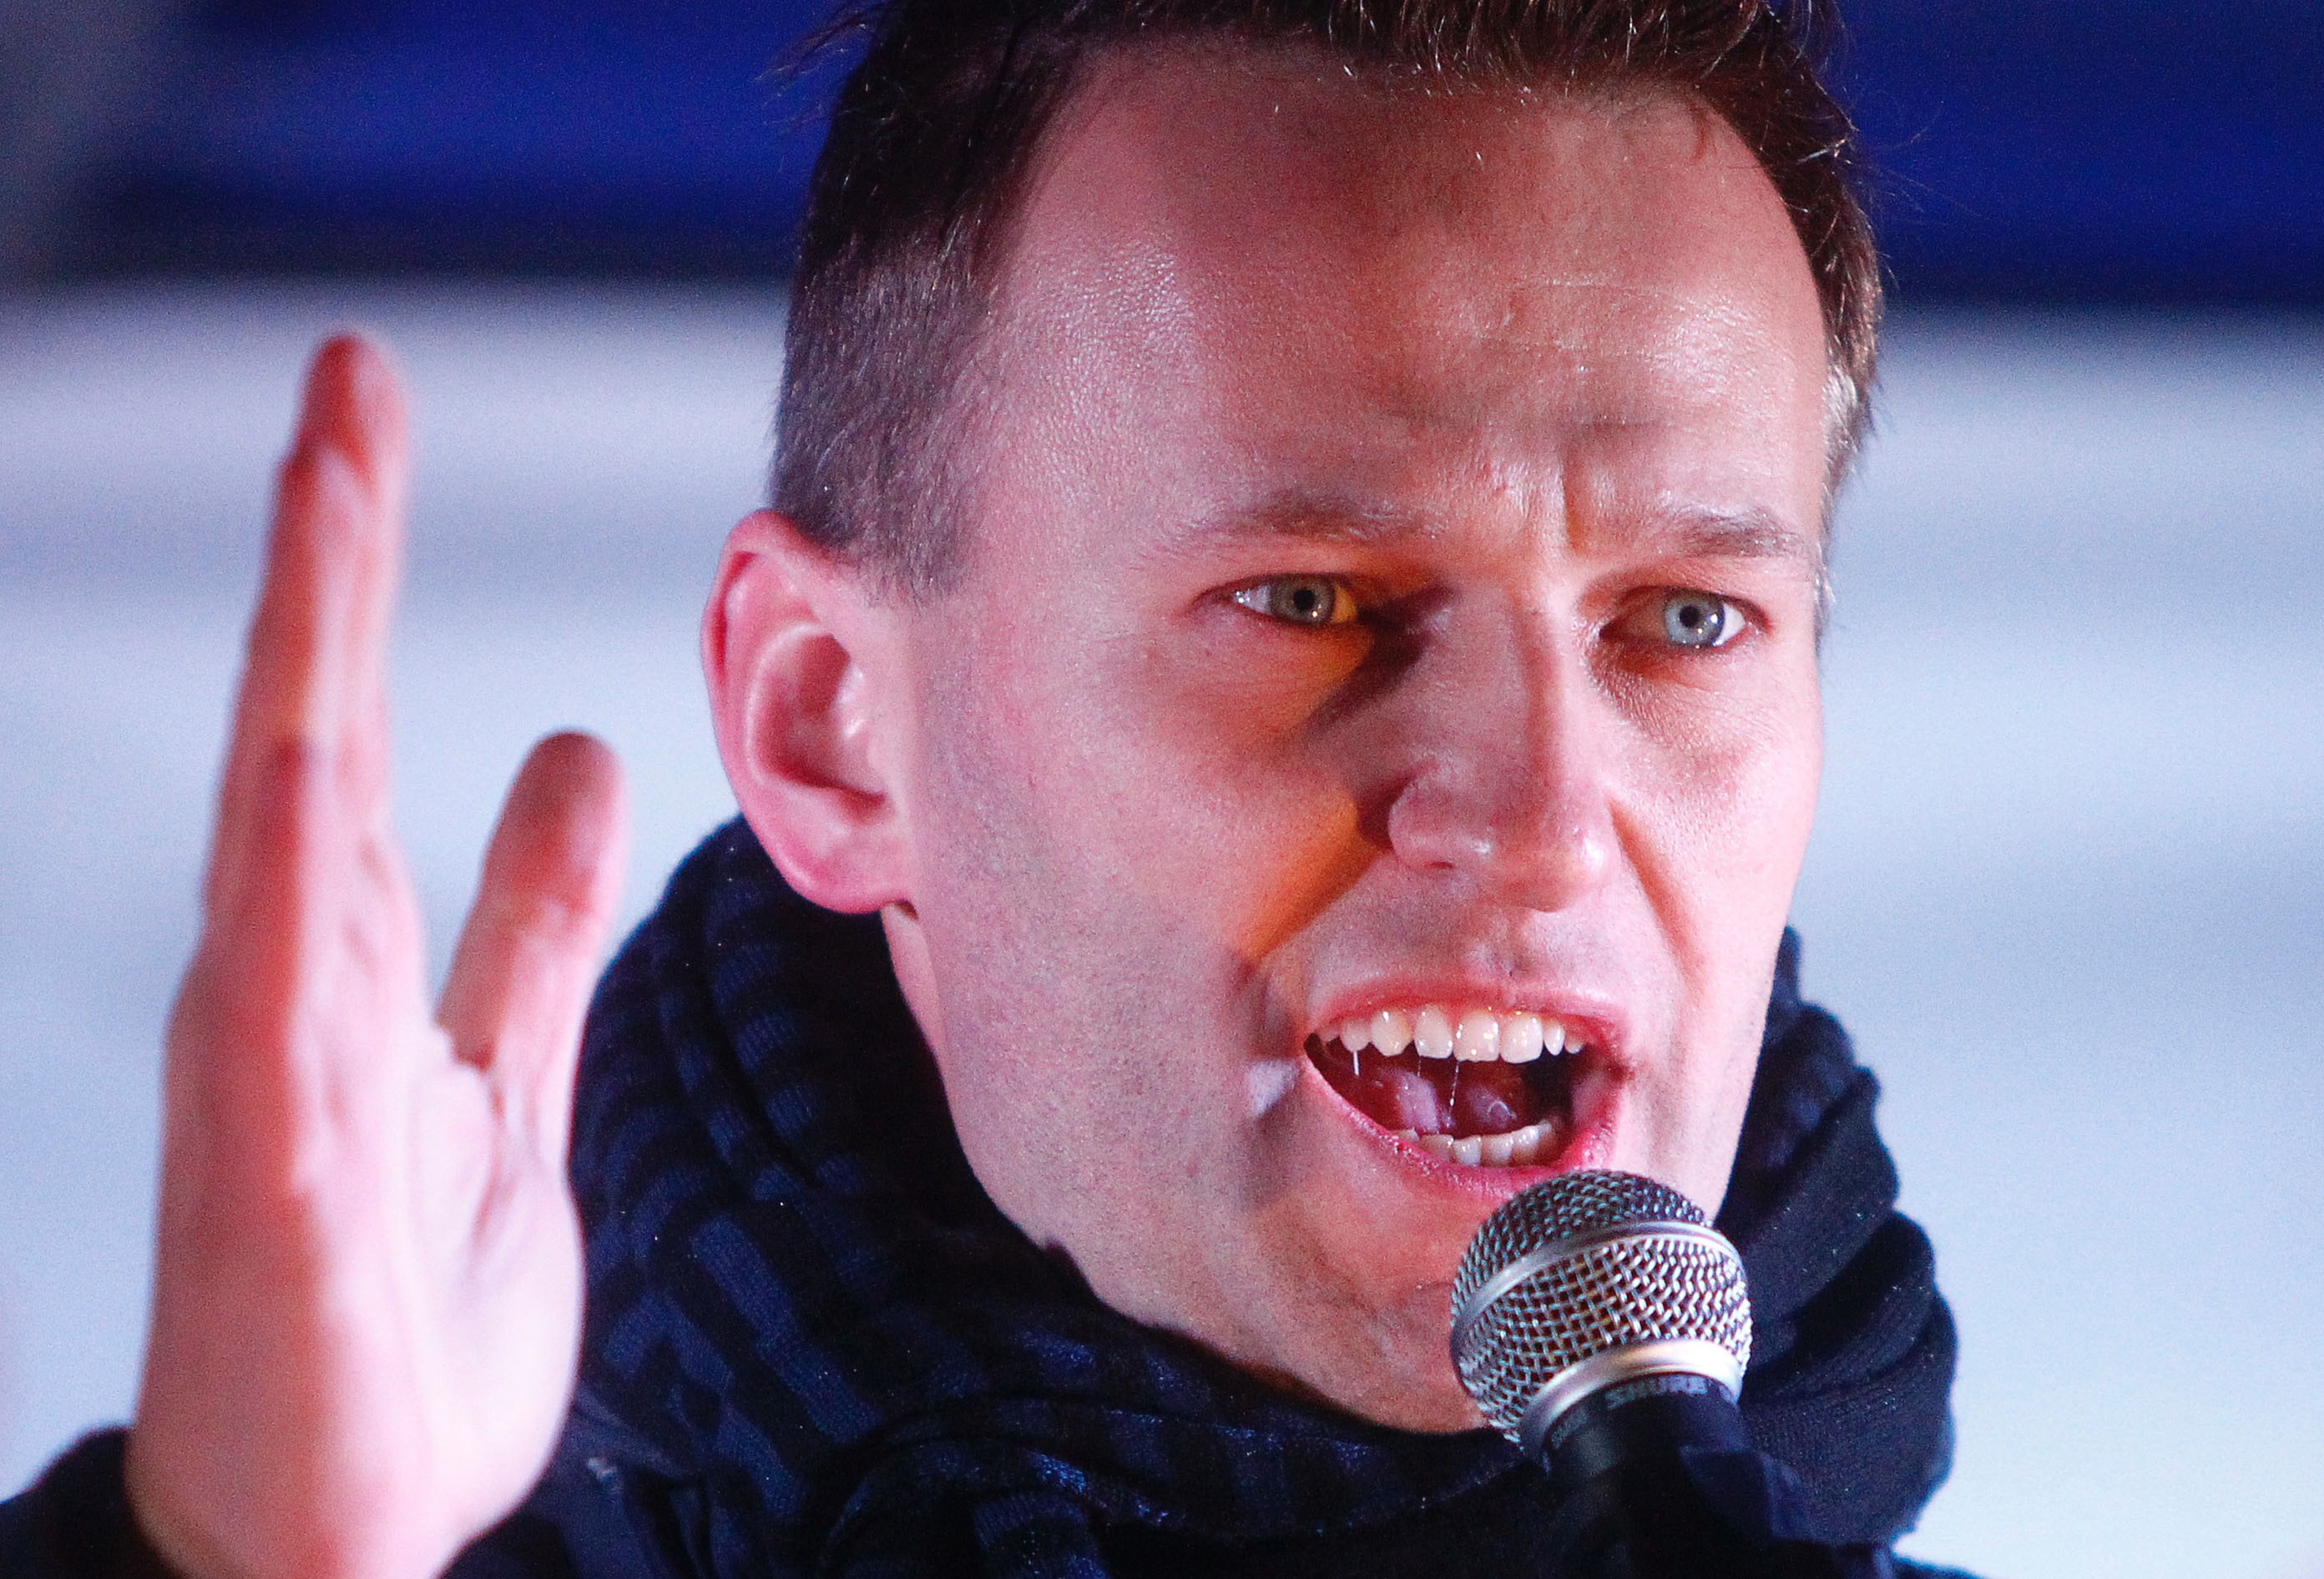 El opositor ruso Alexei Navalni
POLITICA EUROPA RUSIA INTERNACIONAL
MIKHAIL VOSKRESENSKY / ZUMA PRESS / CONTACTOPHOTO
